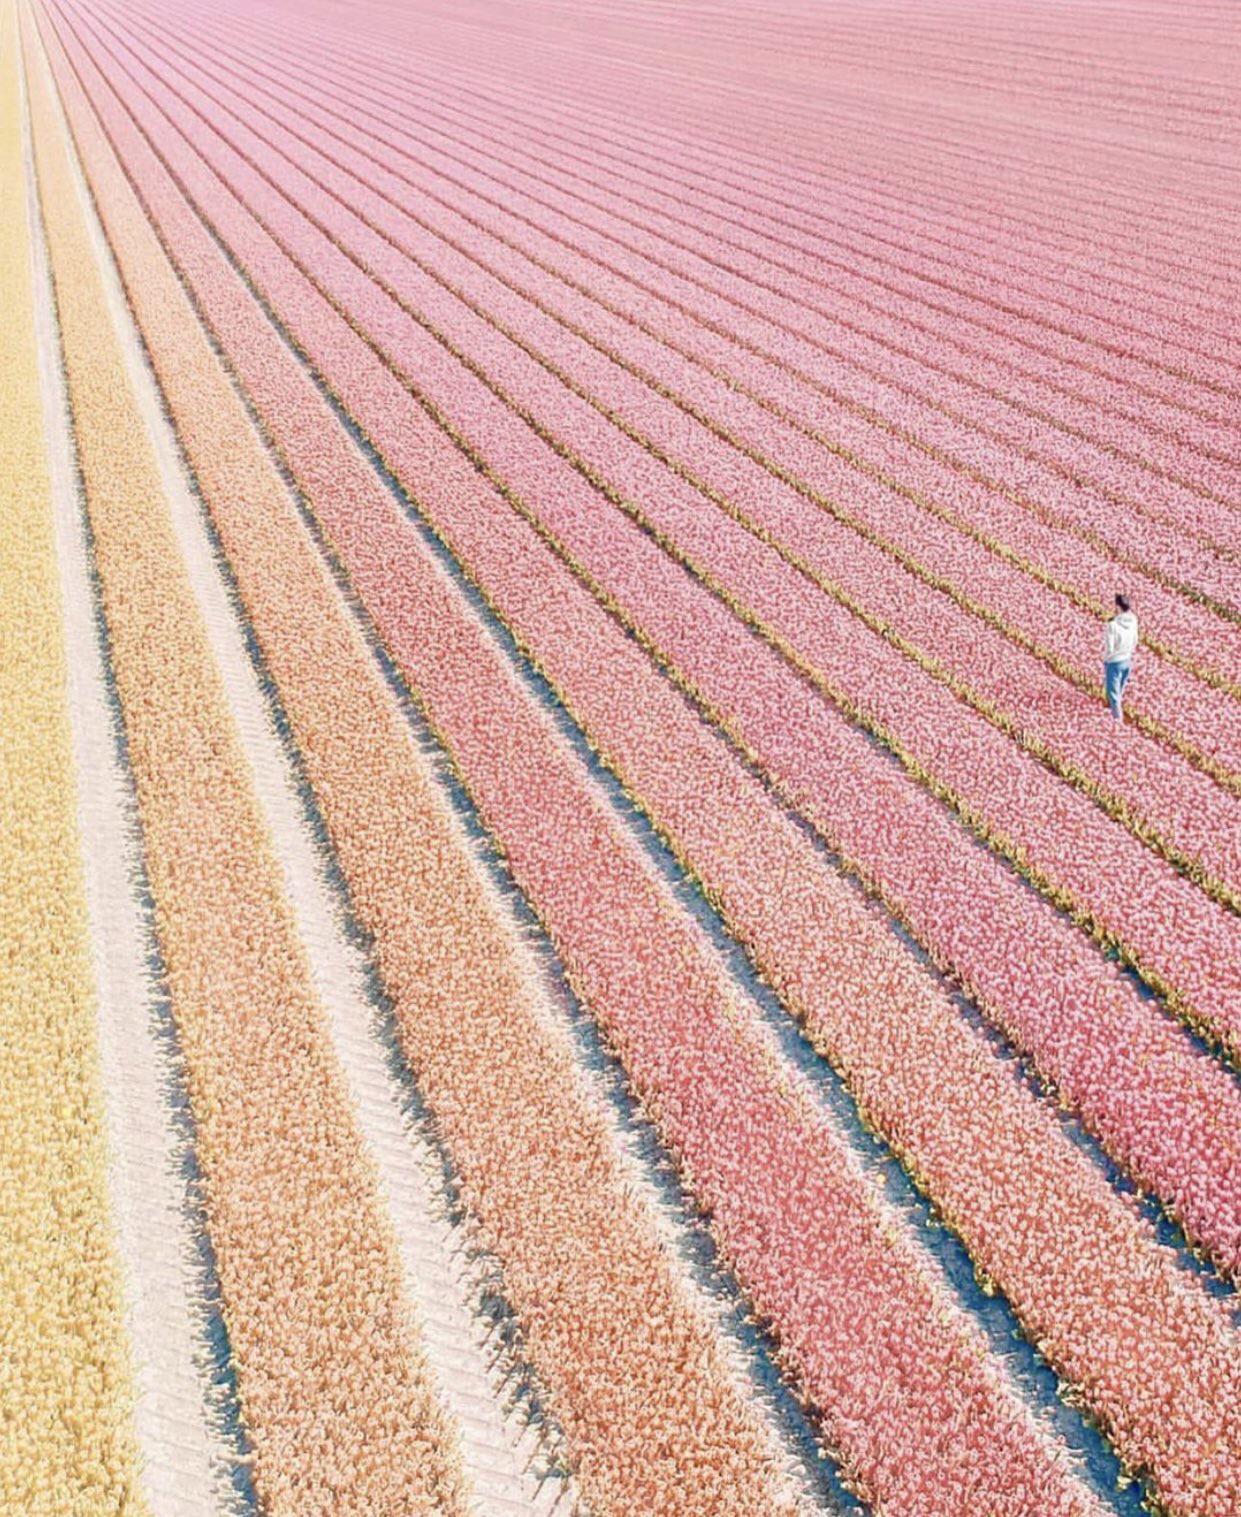 Tulip field in the Netherlands seem nice.